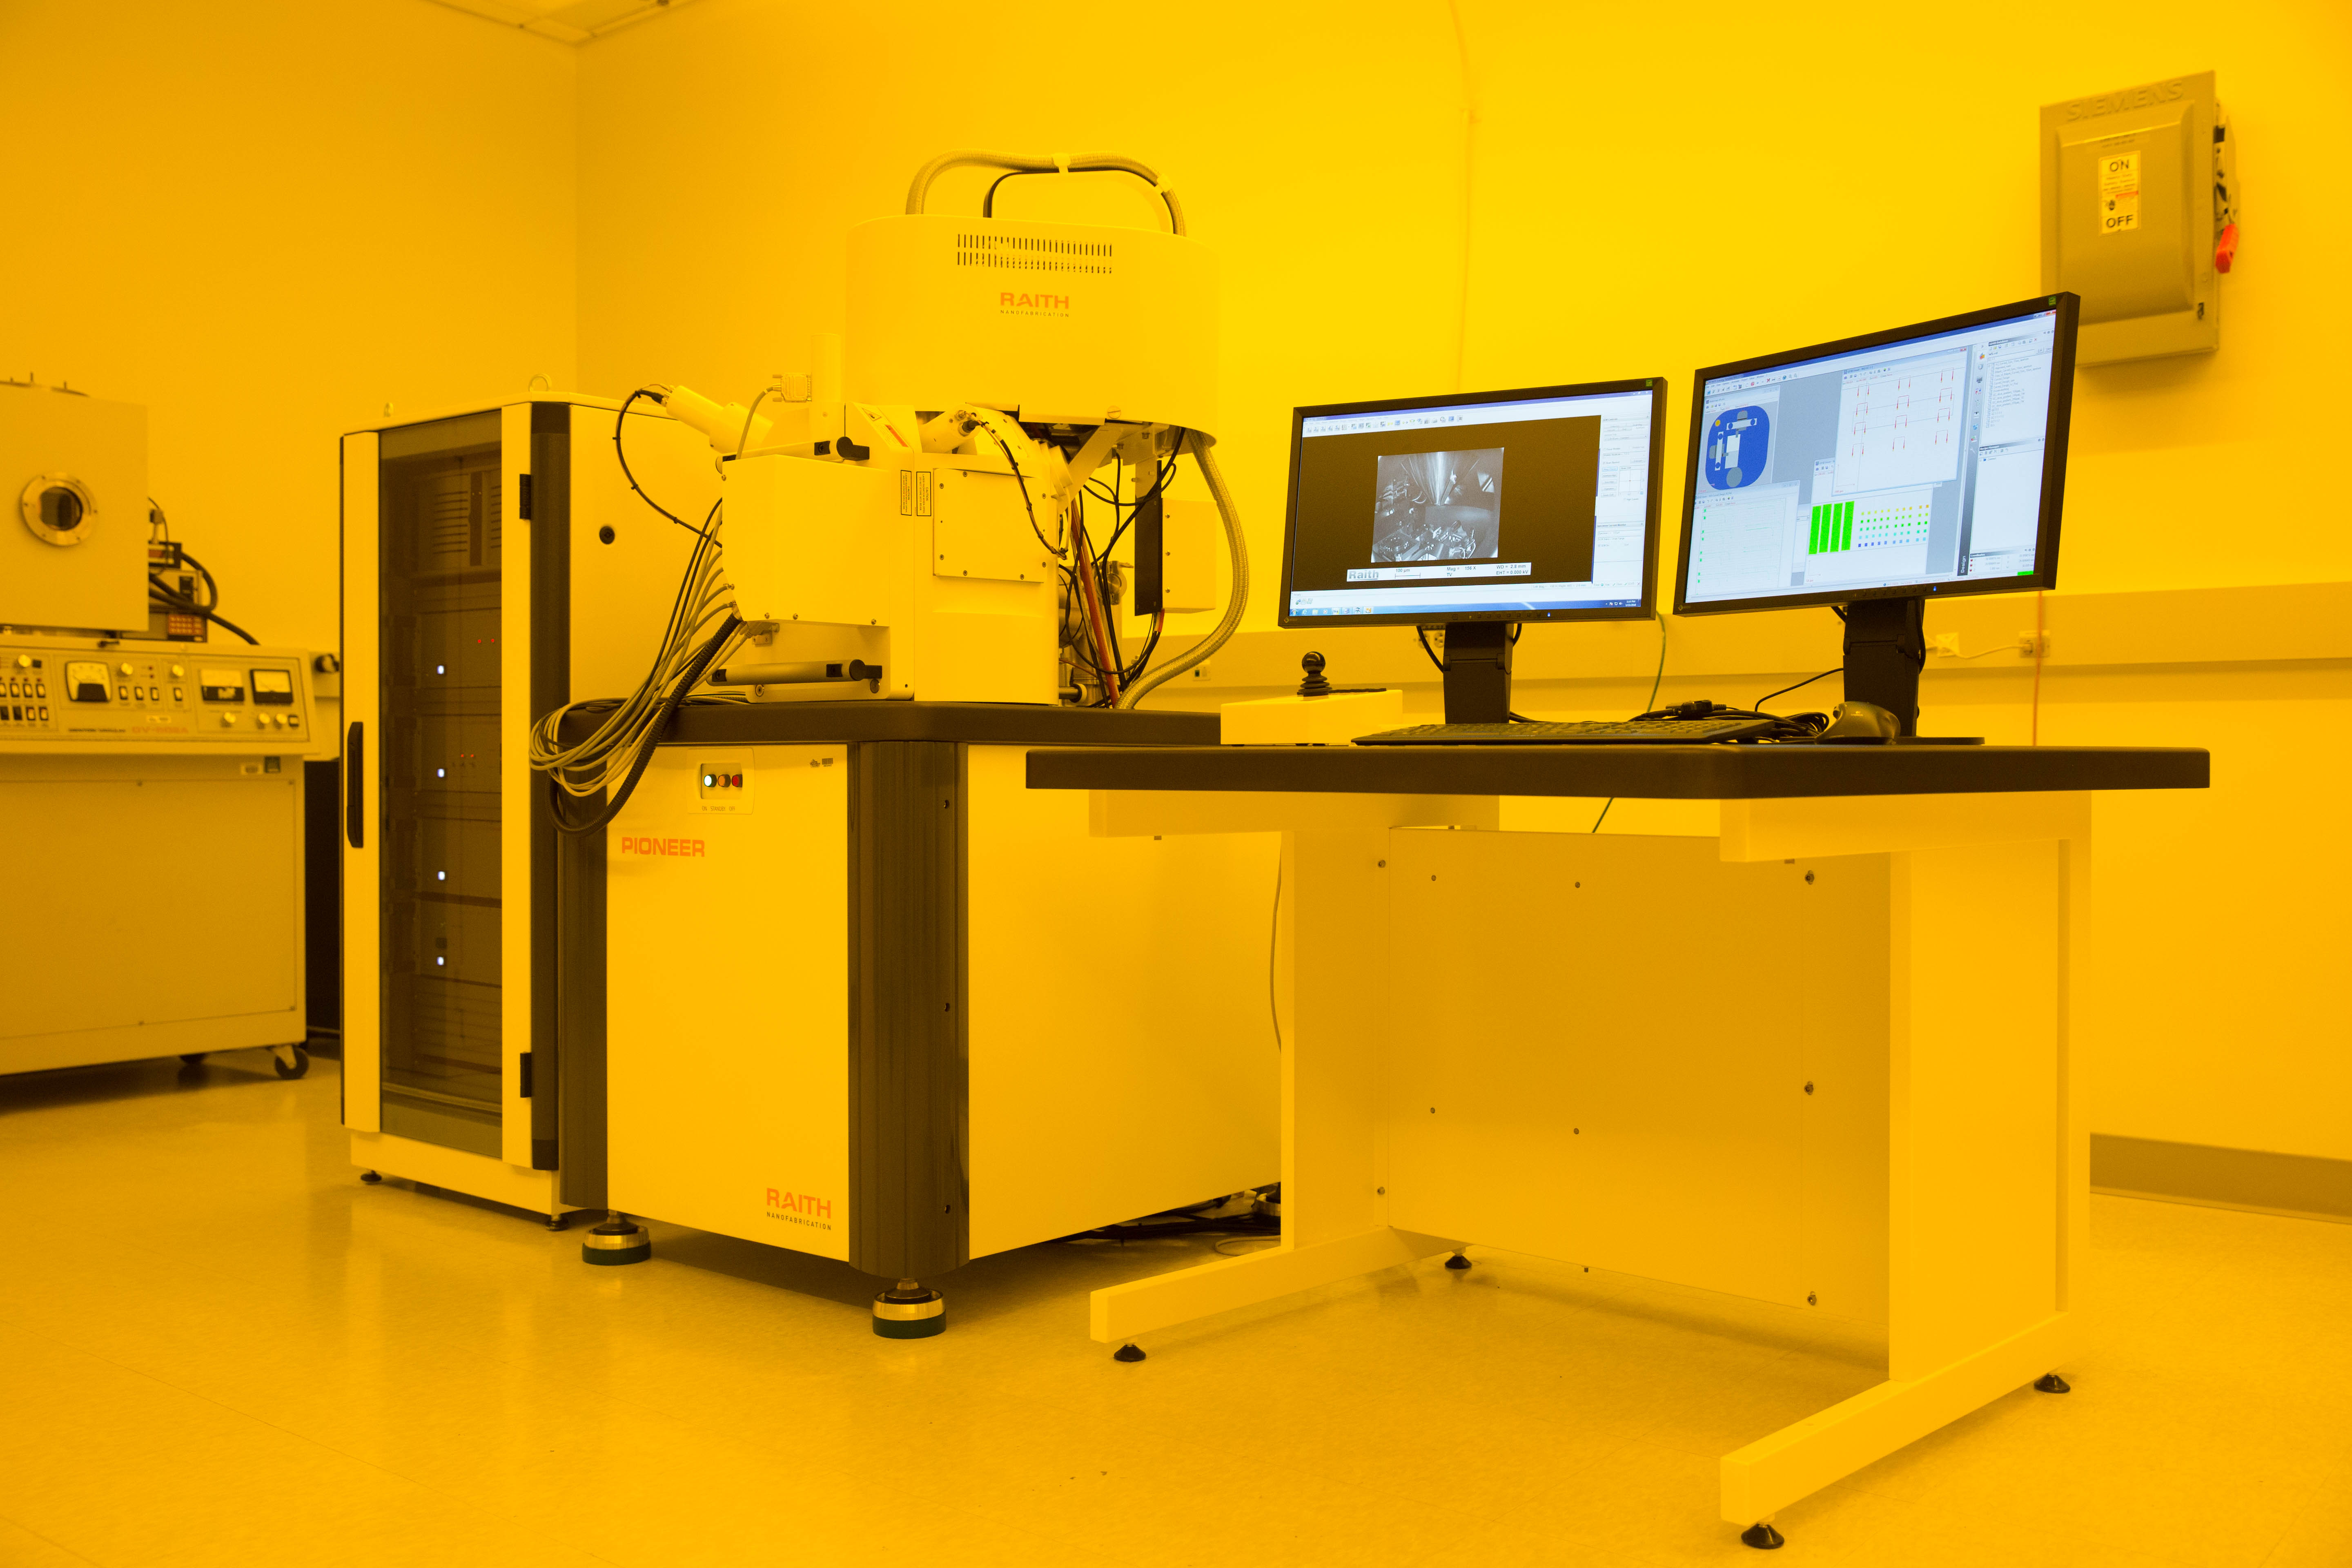 Equipment in the Nanofabrication cleanroom